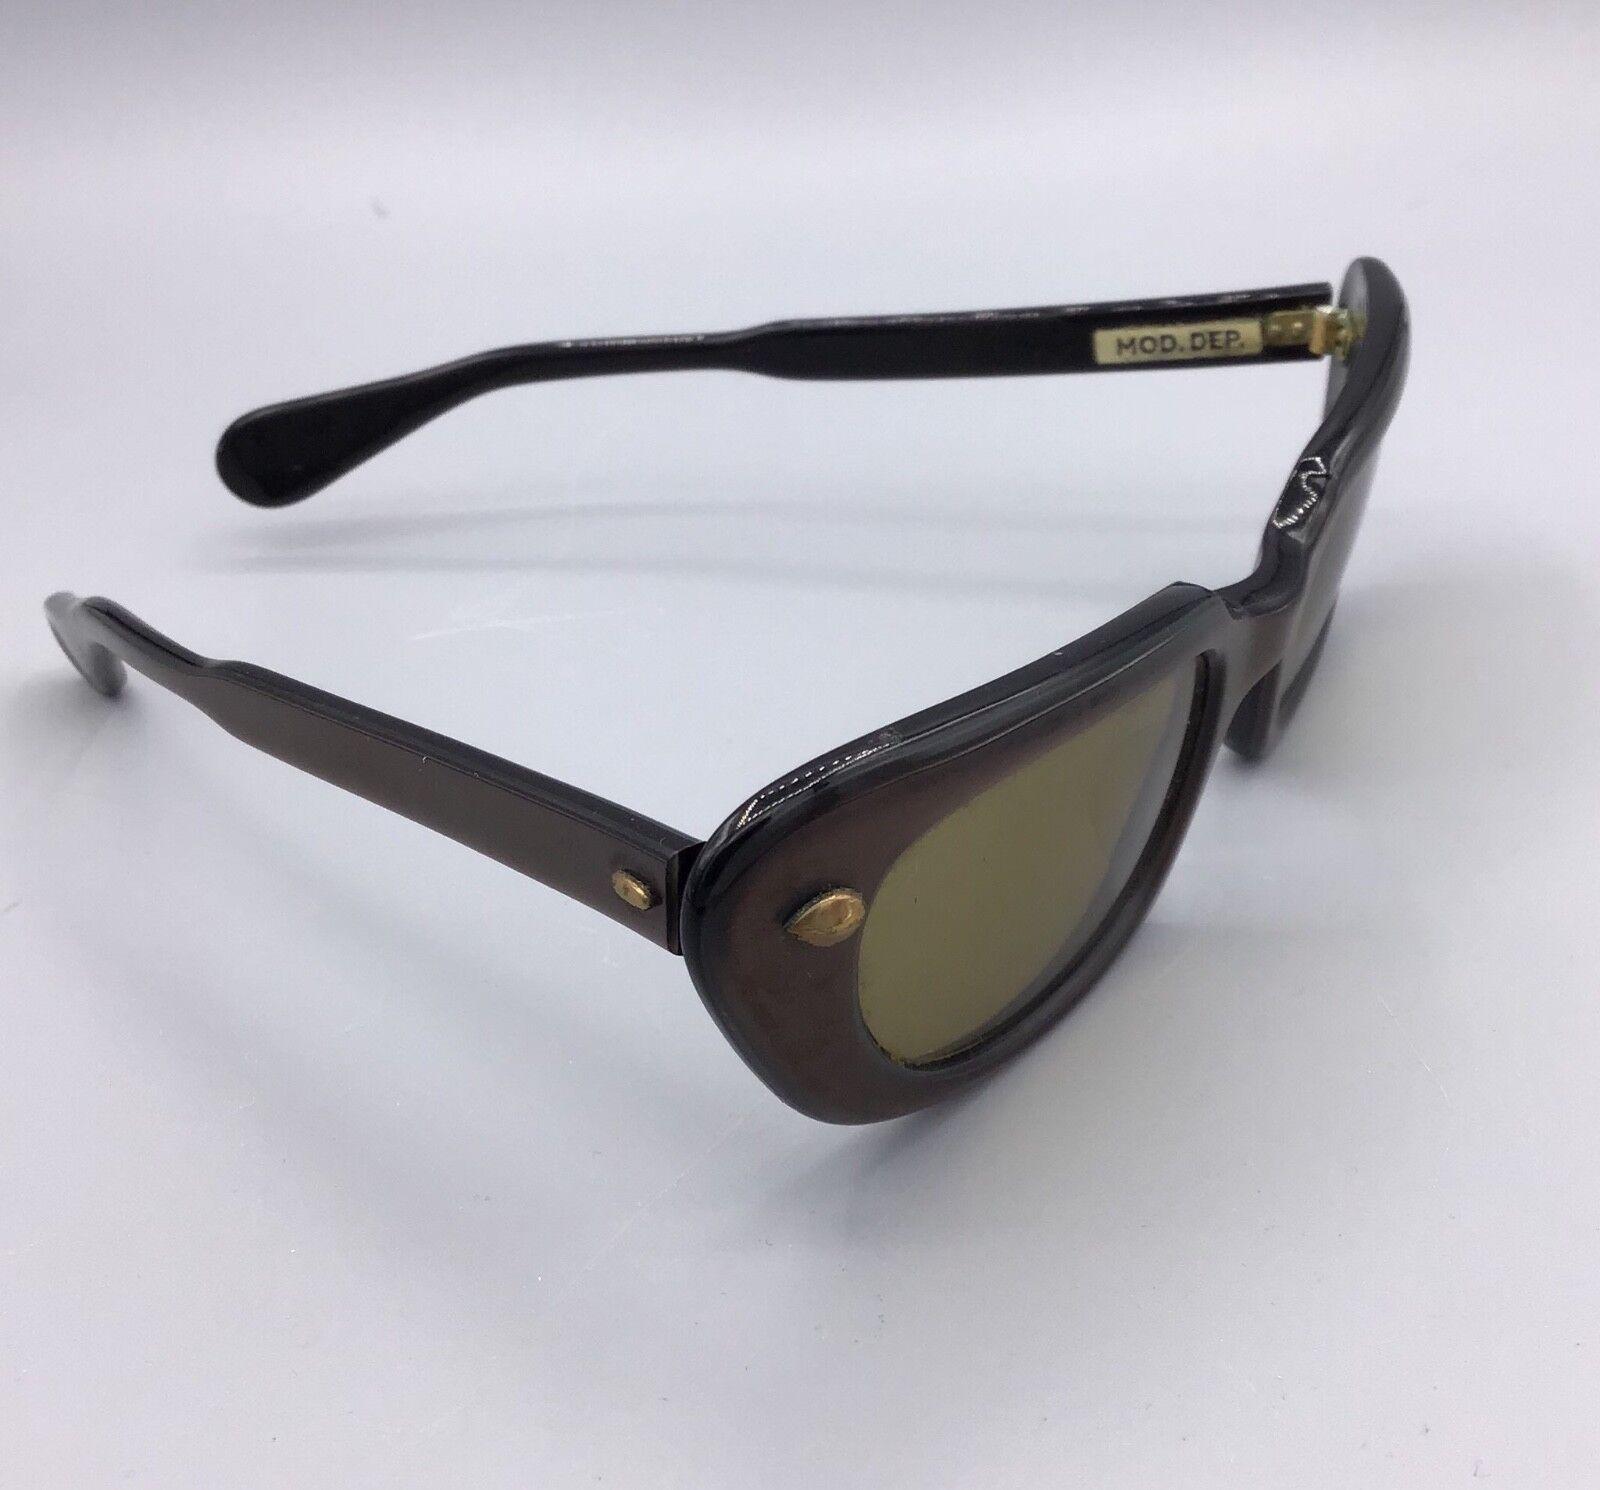 ViennaLine occhiale vintage da sole Sunglasses sonnenbrillen lunettes gafas sol